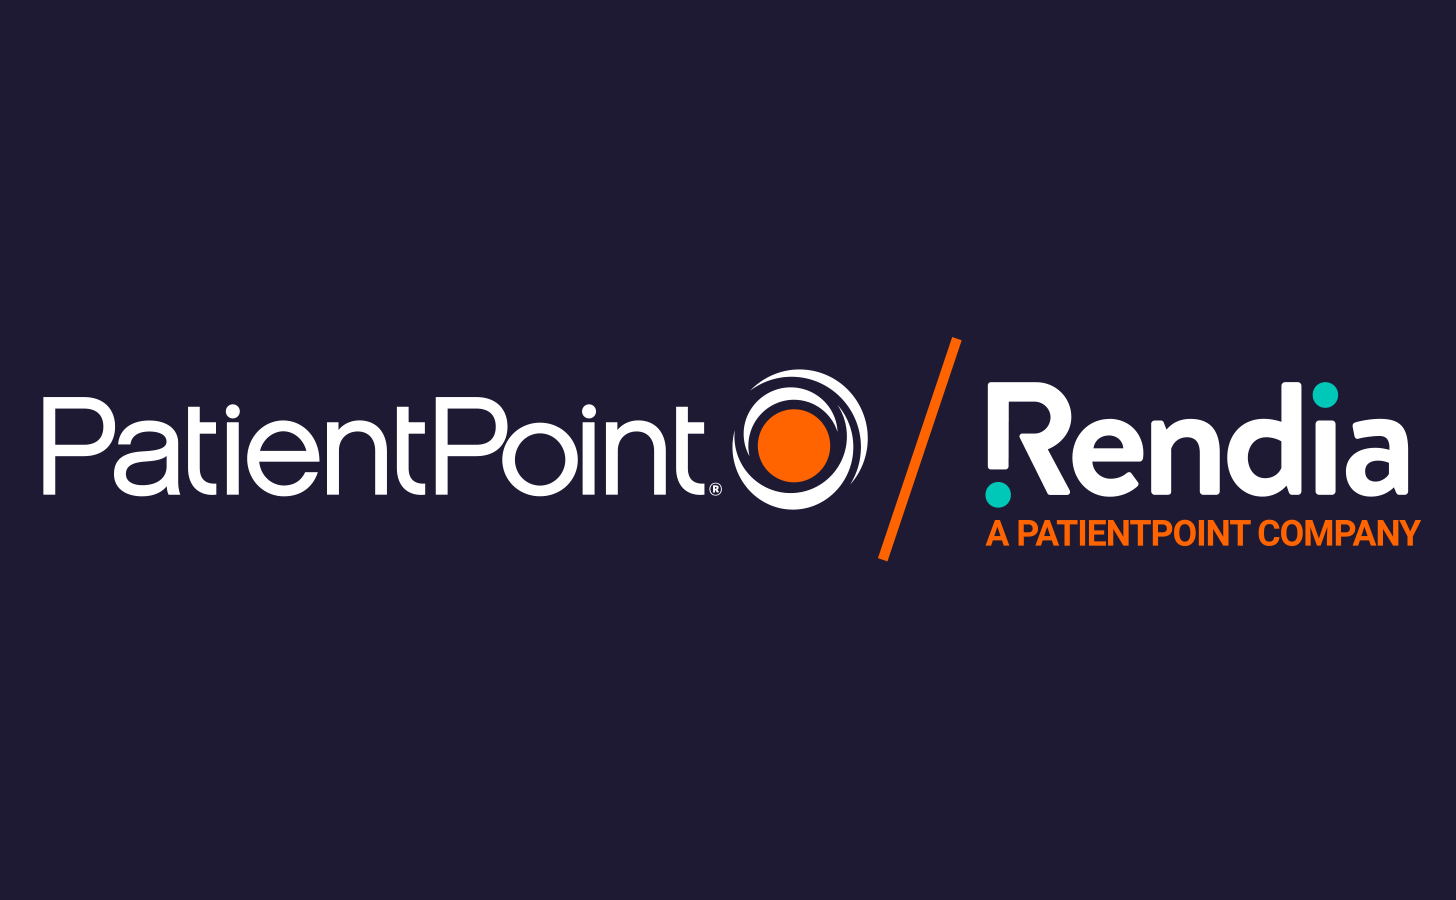 PatientPoint and Rendia logo